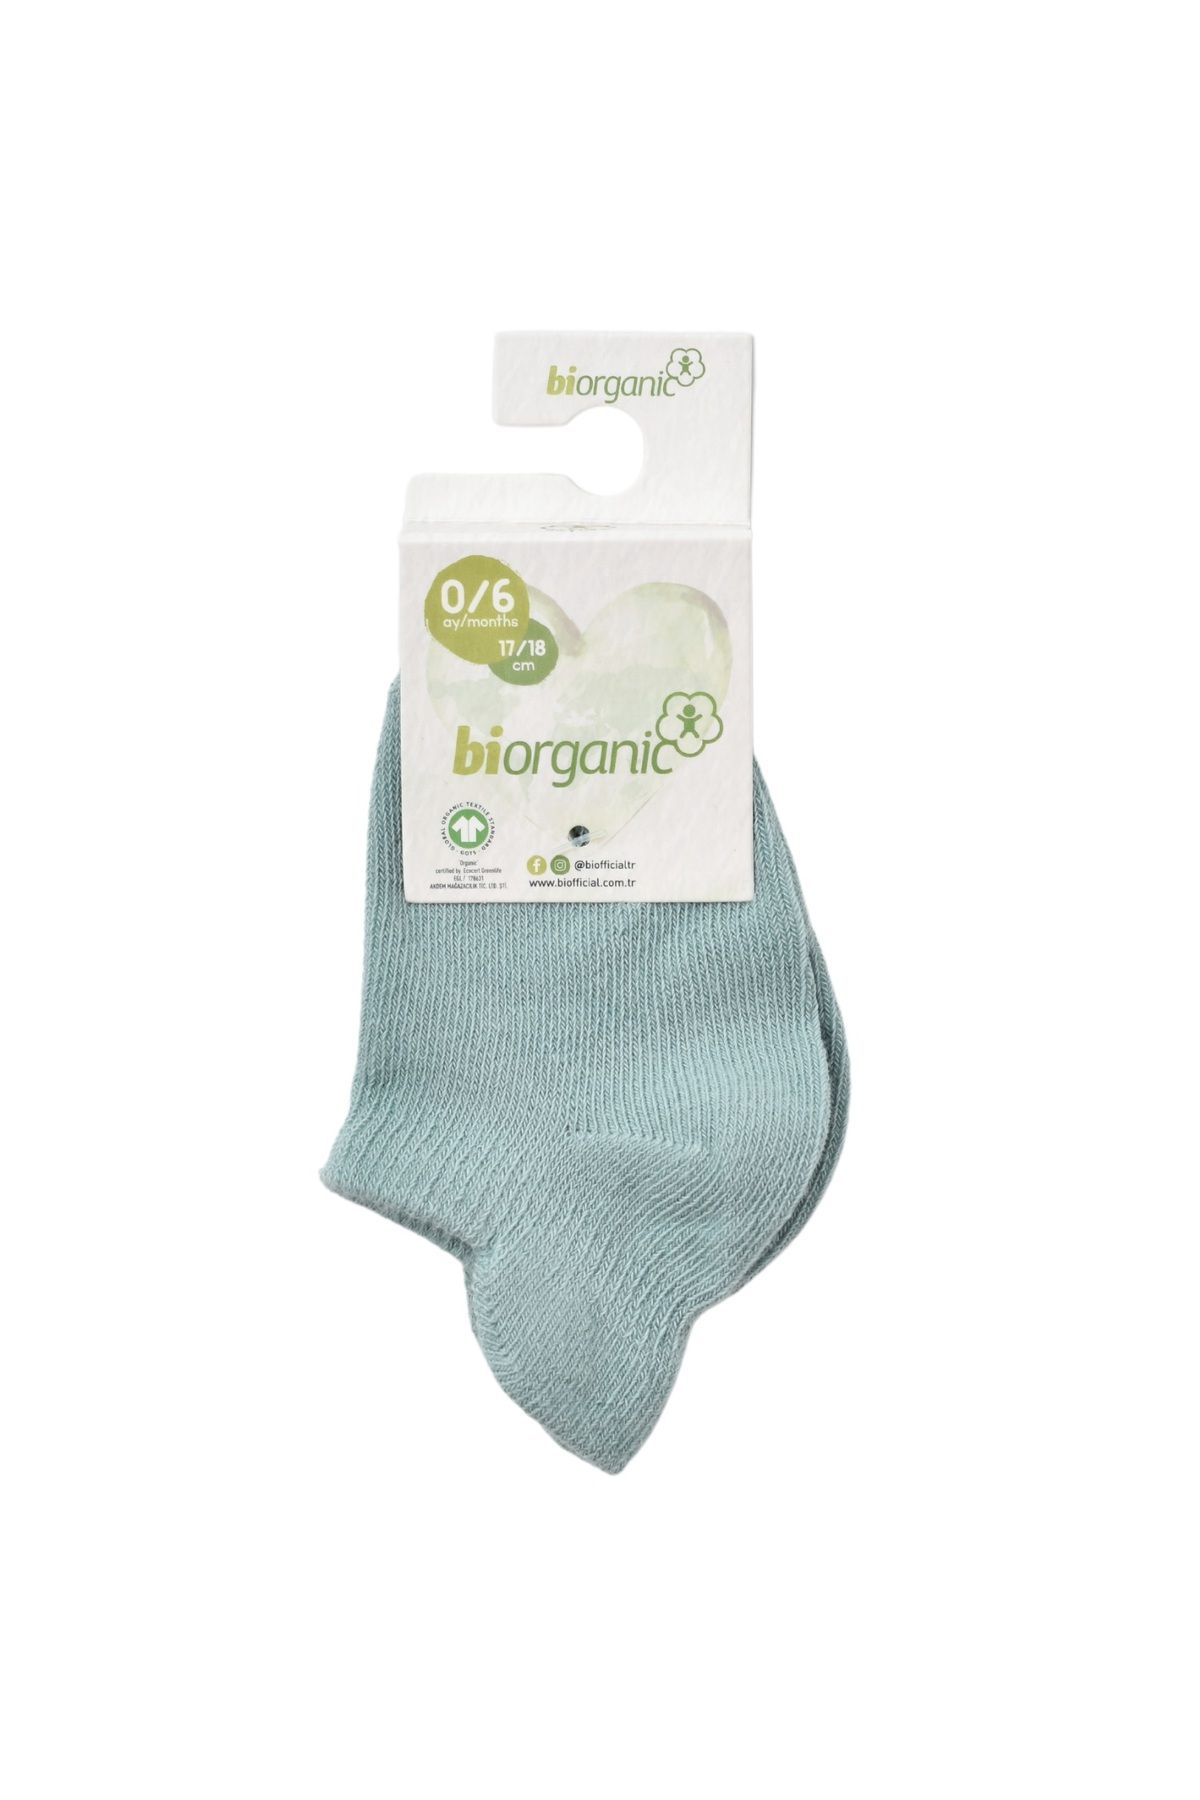 Bibaby Biorganic Sneakers Basic Çorap 68389 Yeşil